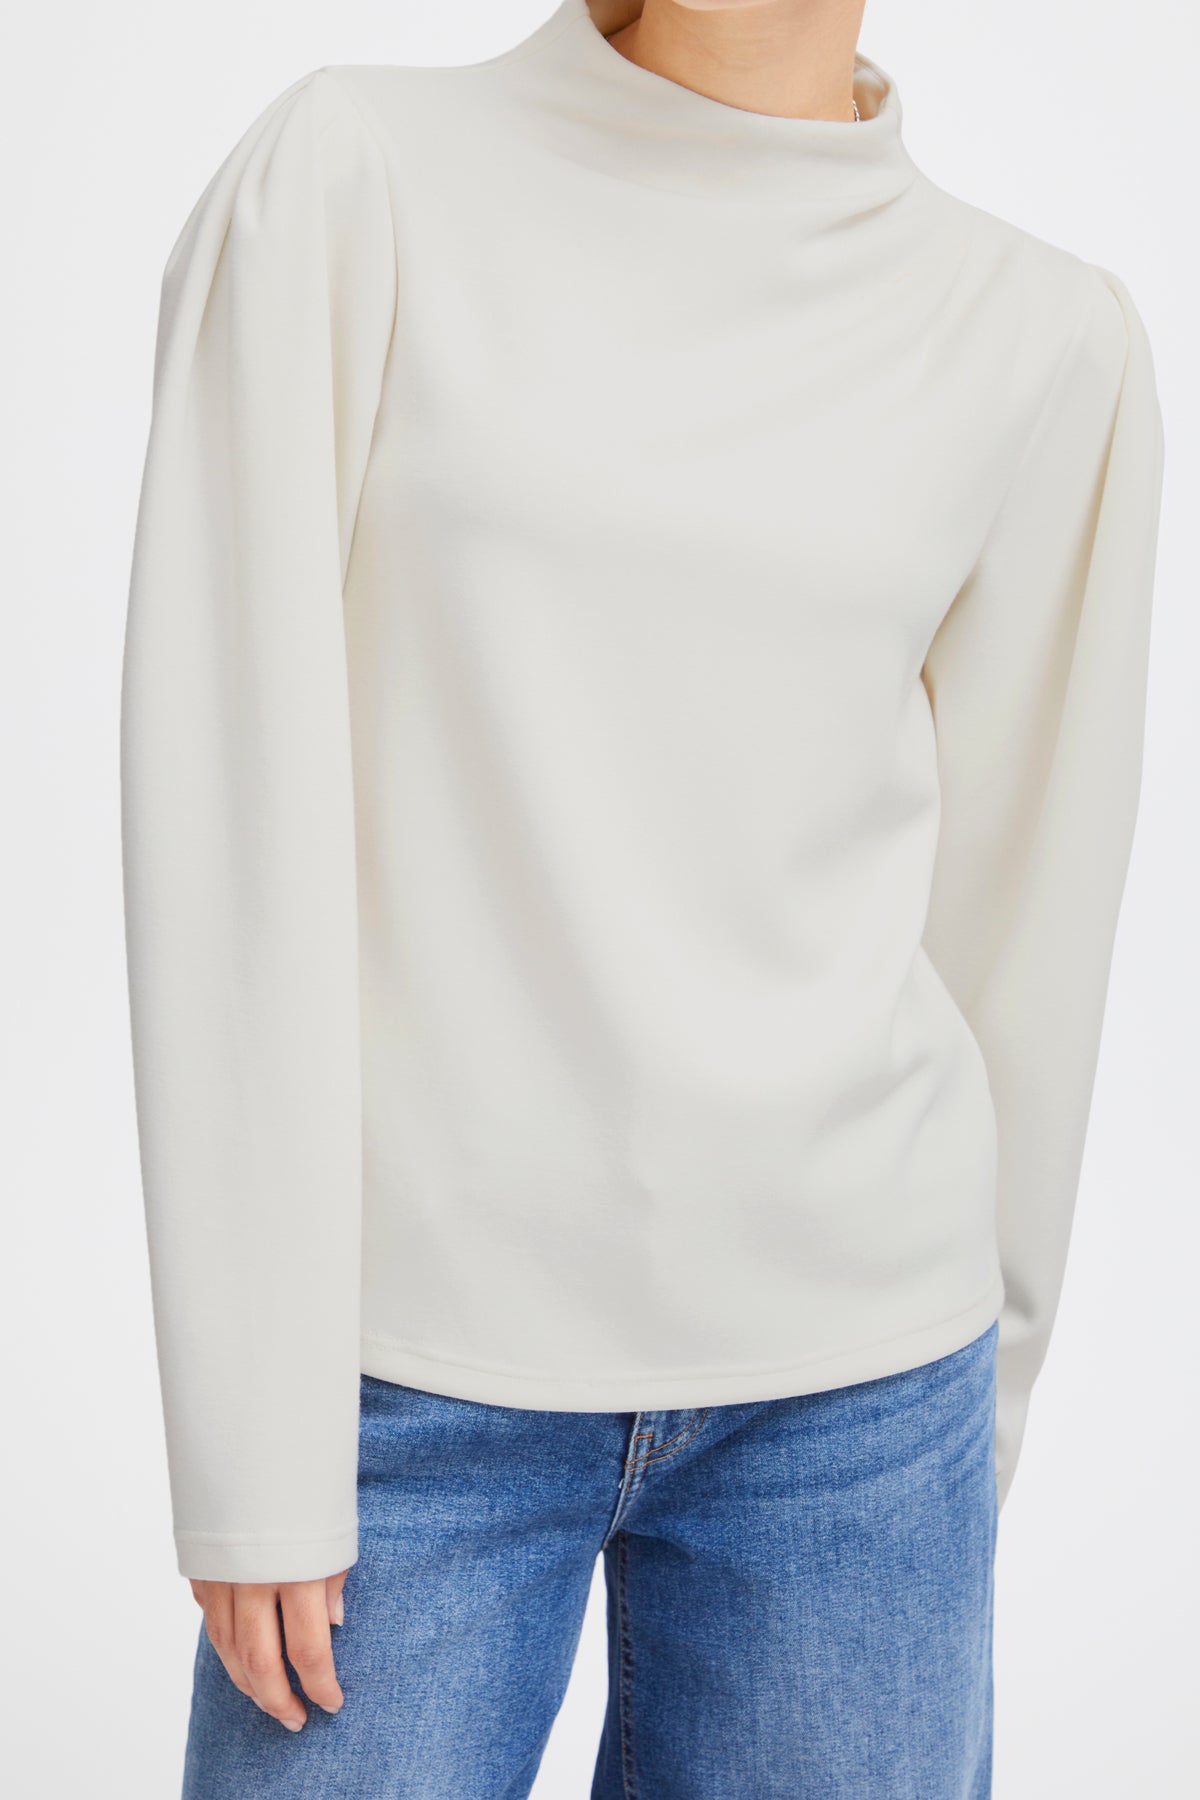 Naida Long Sleeve T-Shirt in Star White